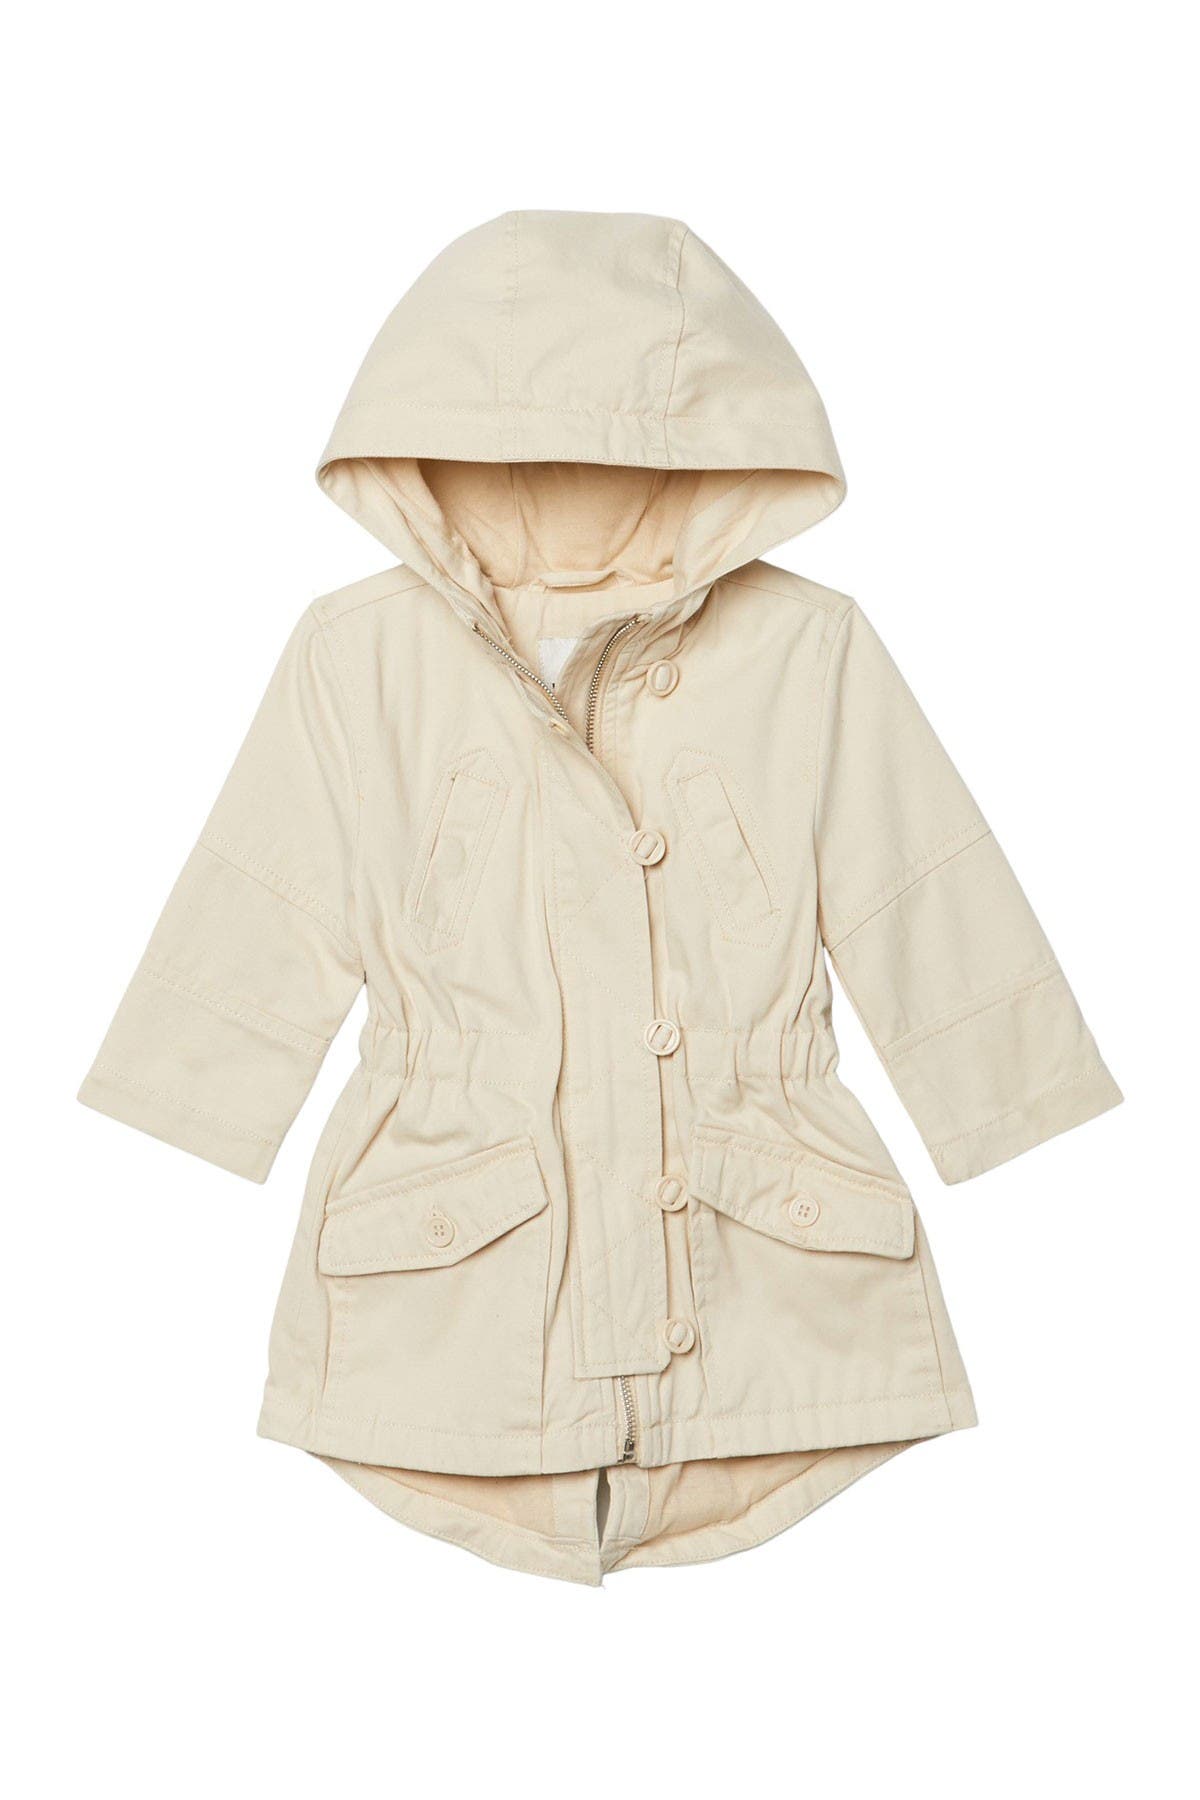 michael kors toddler boy coat